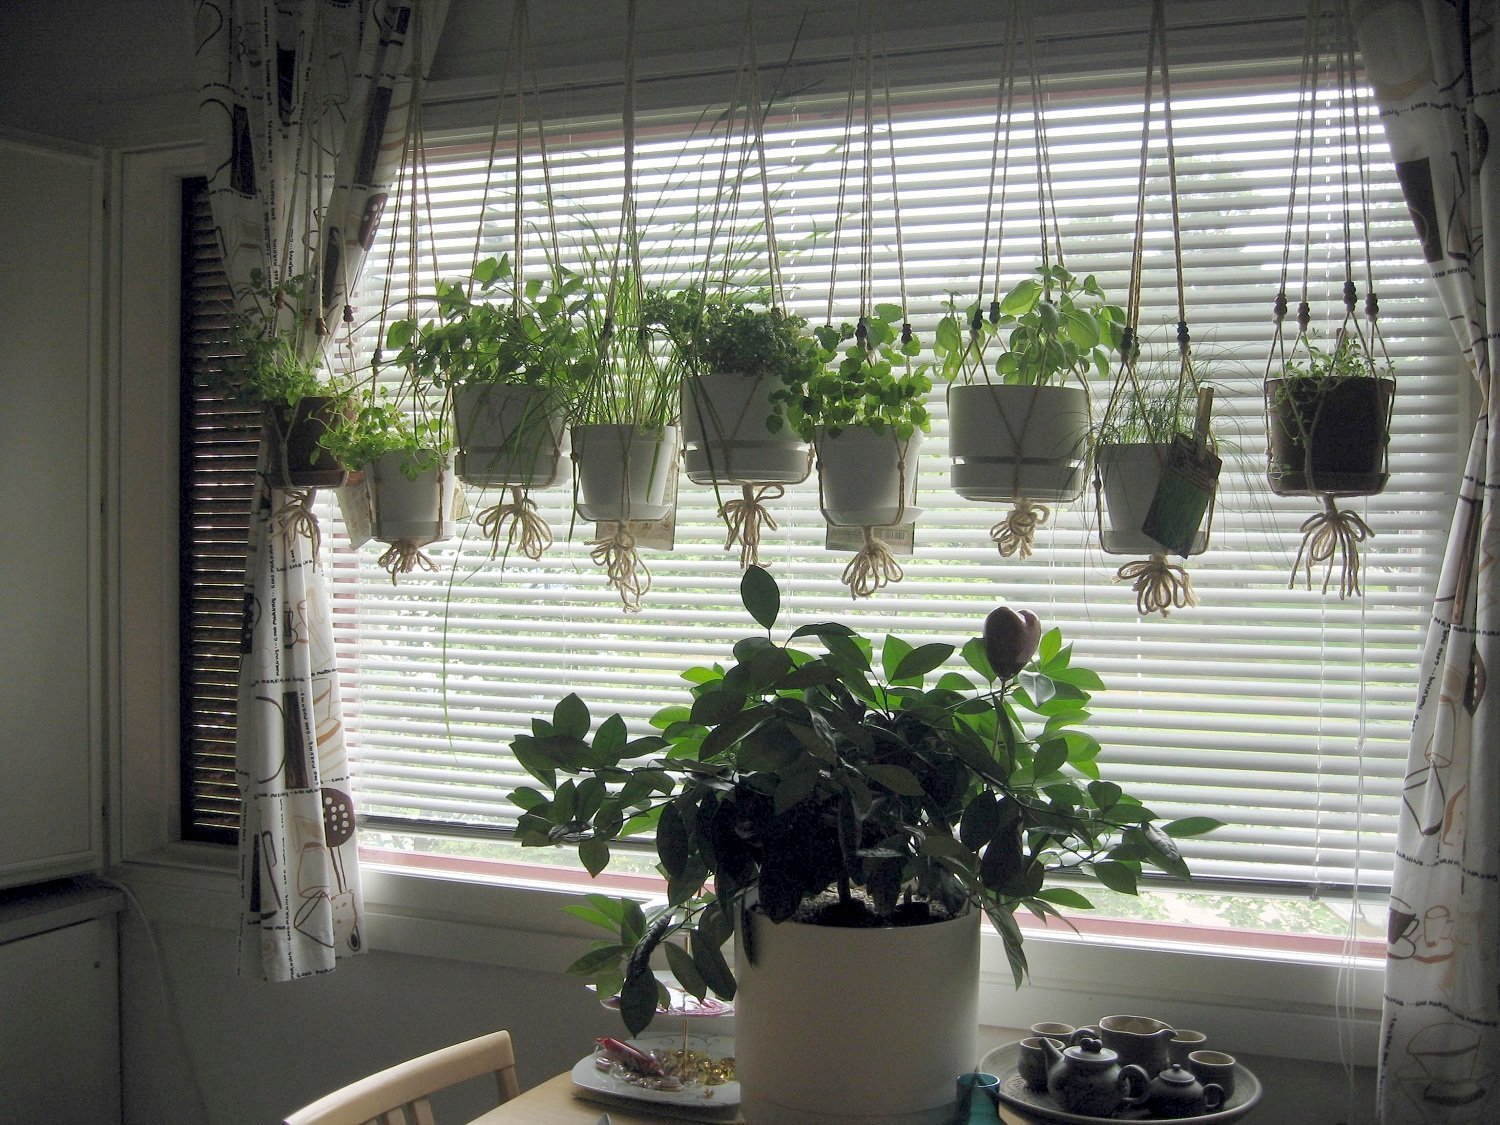 rustic-dining-room-design-with-hanging-from-ceiling-indoor-herb-garden-planter-pots